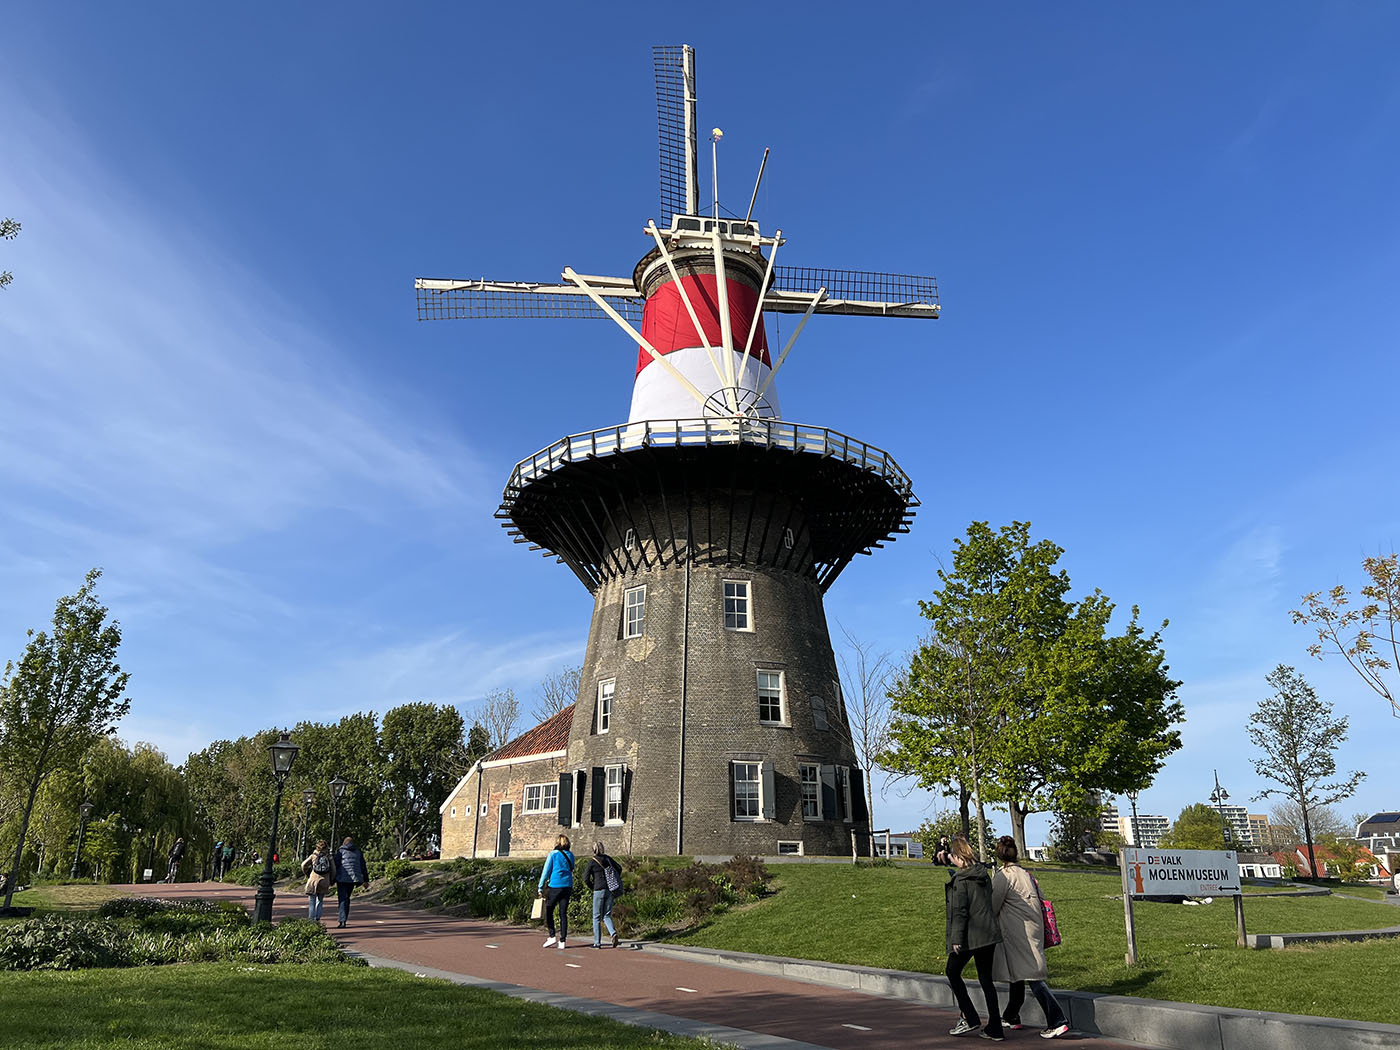 Windmill De Valk. Leiden, The Netherlands. Credit: Carolina Valenzuela